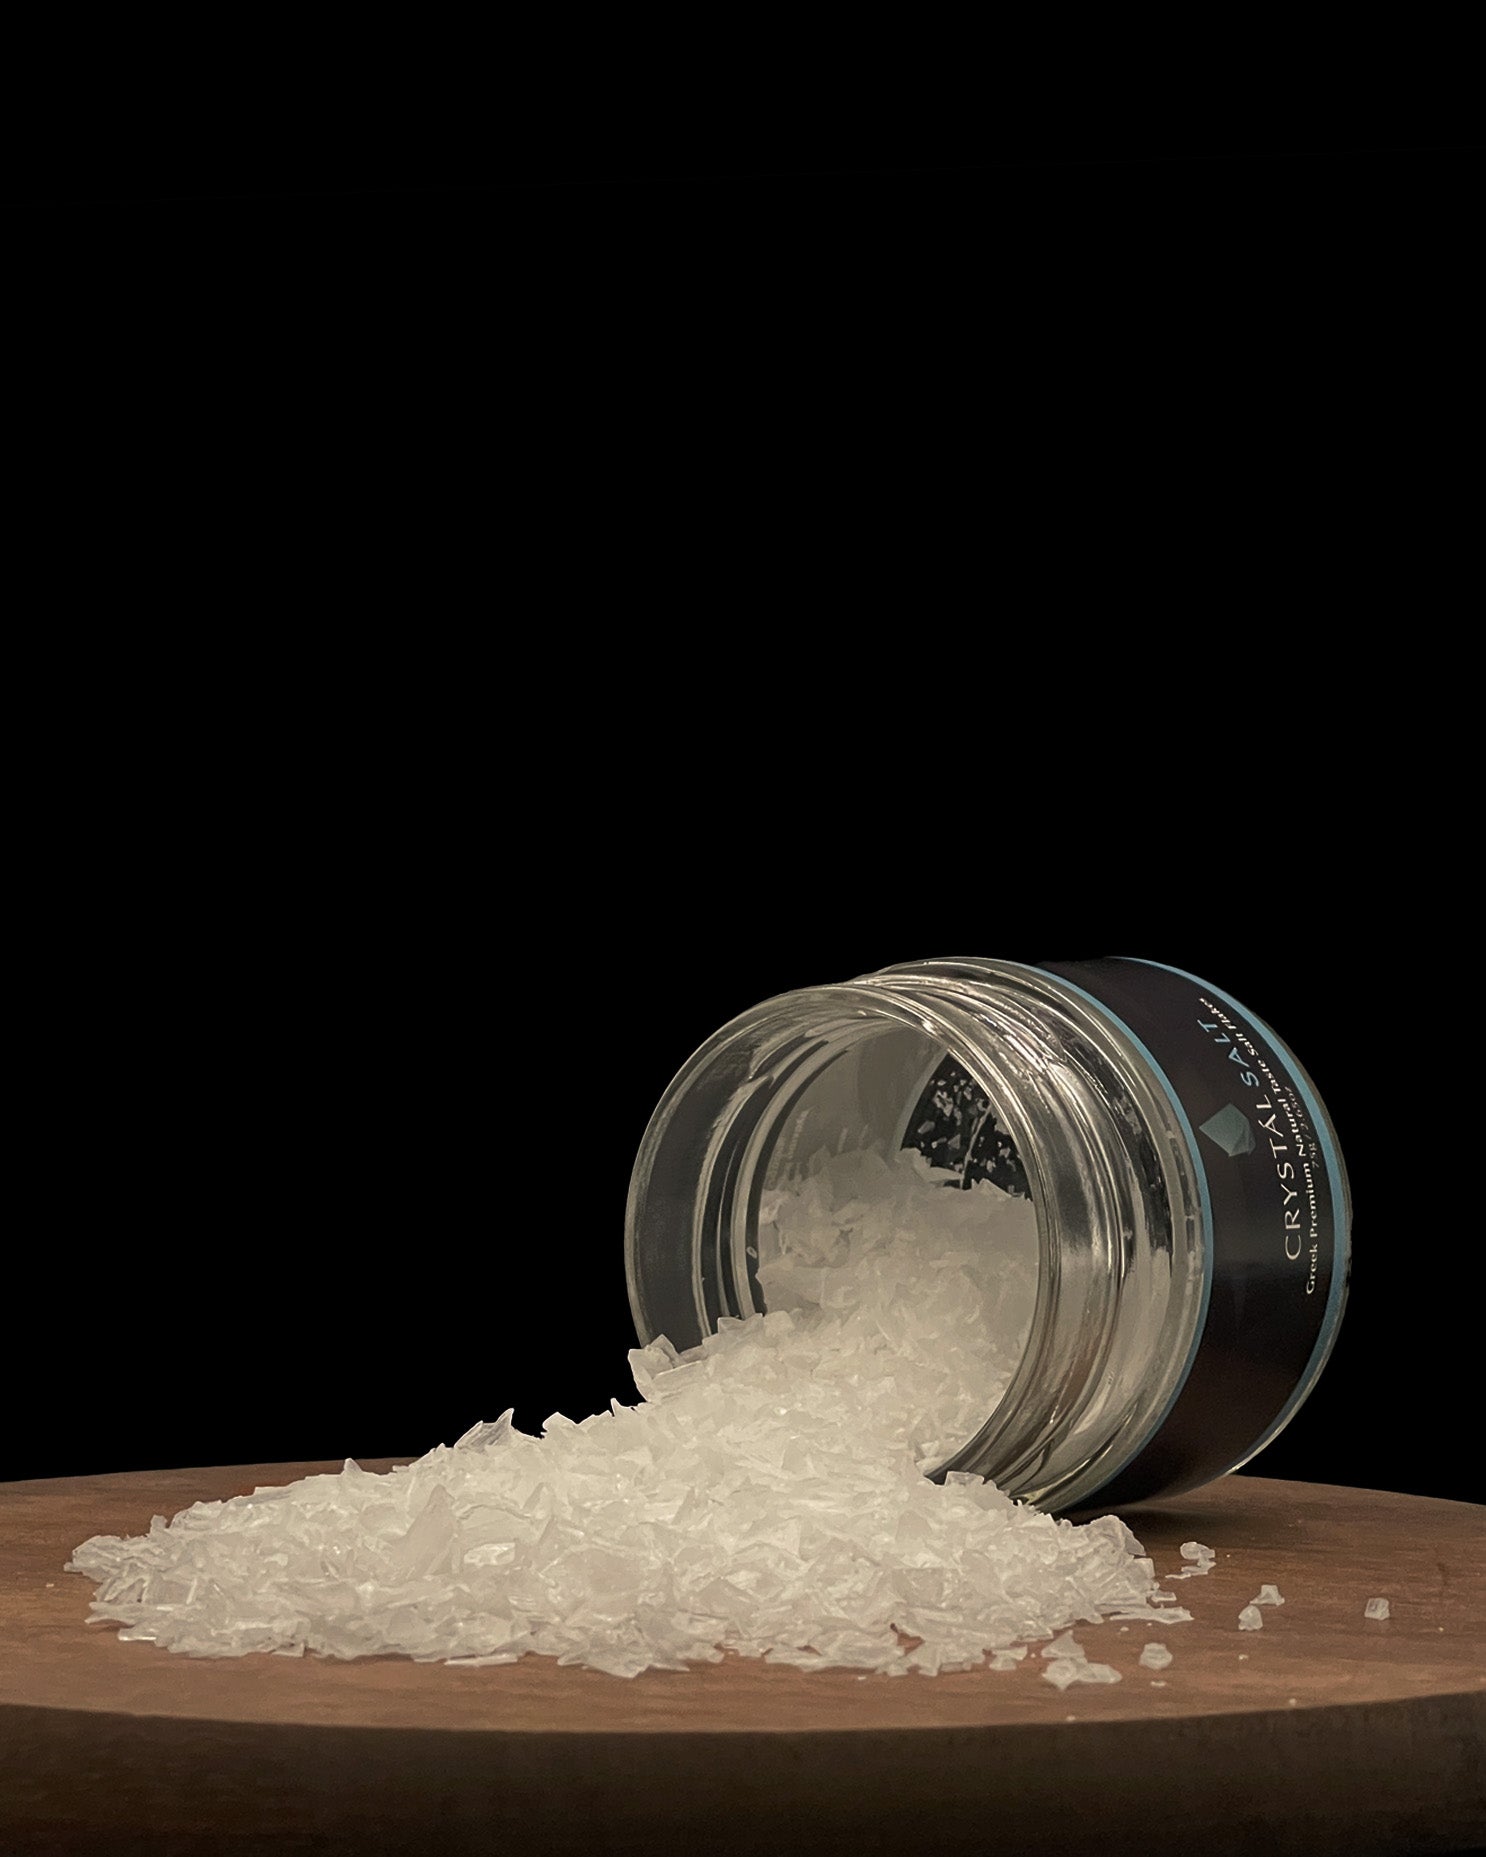 Crystál Salt Flakes - Natural